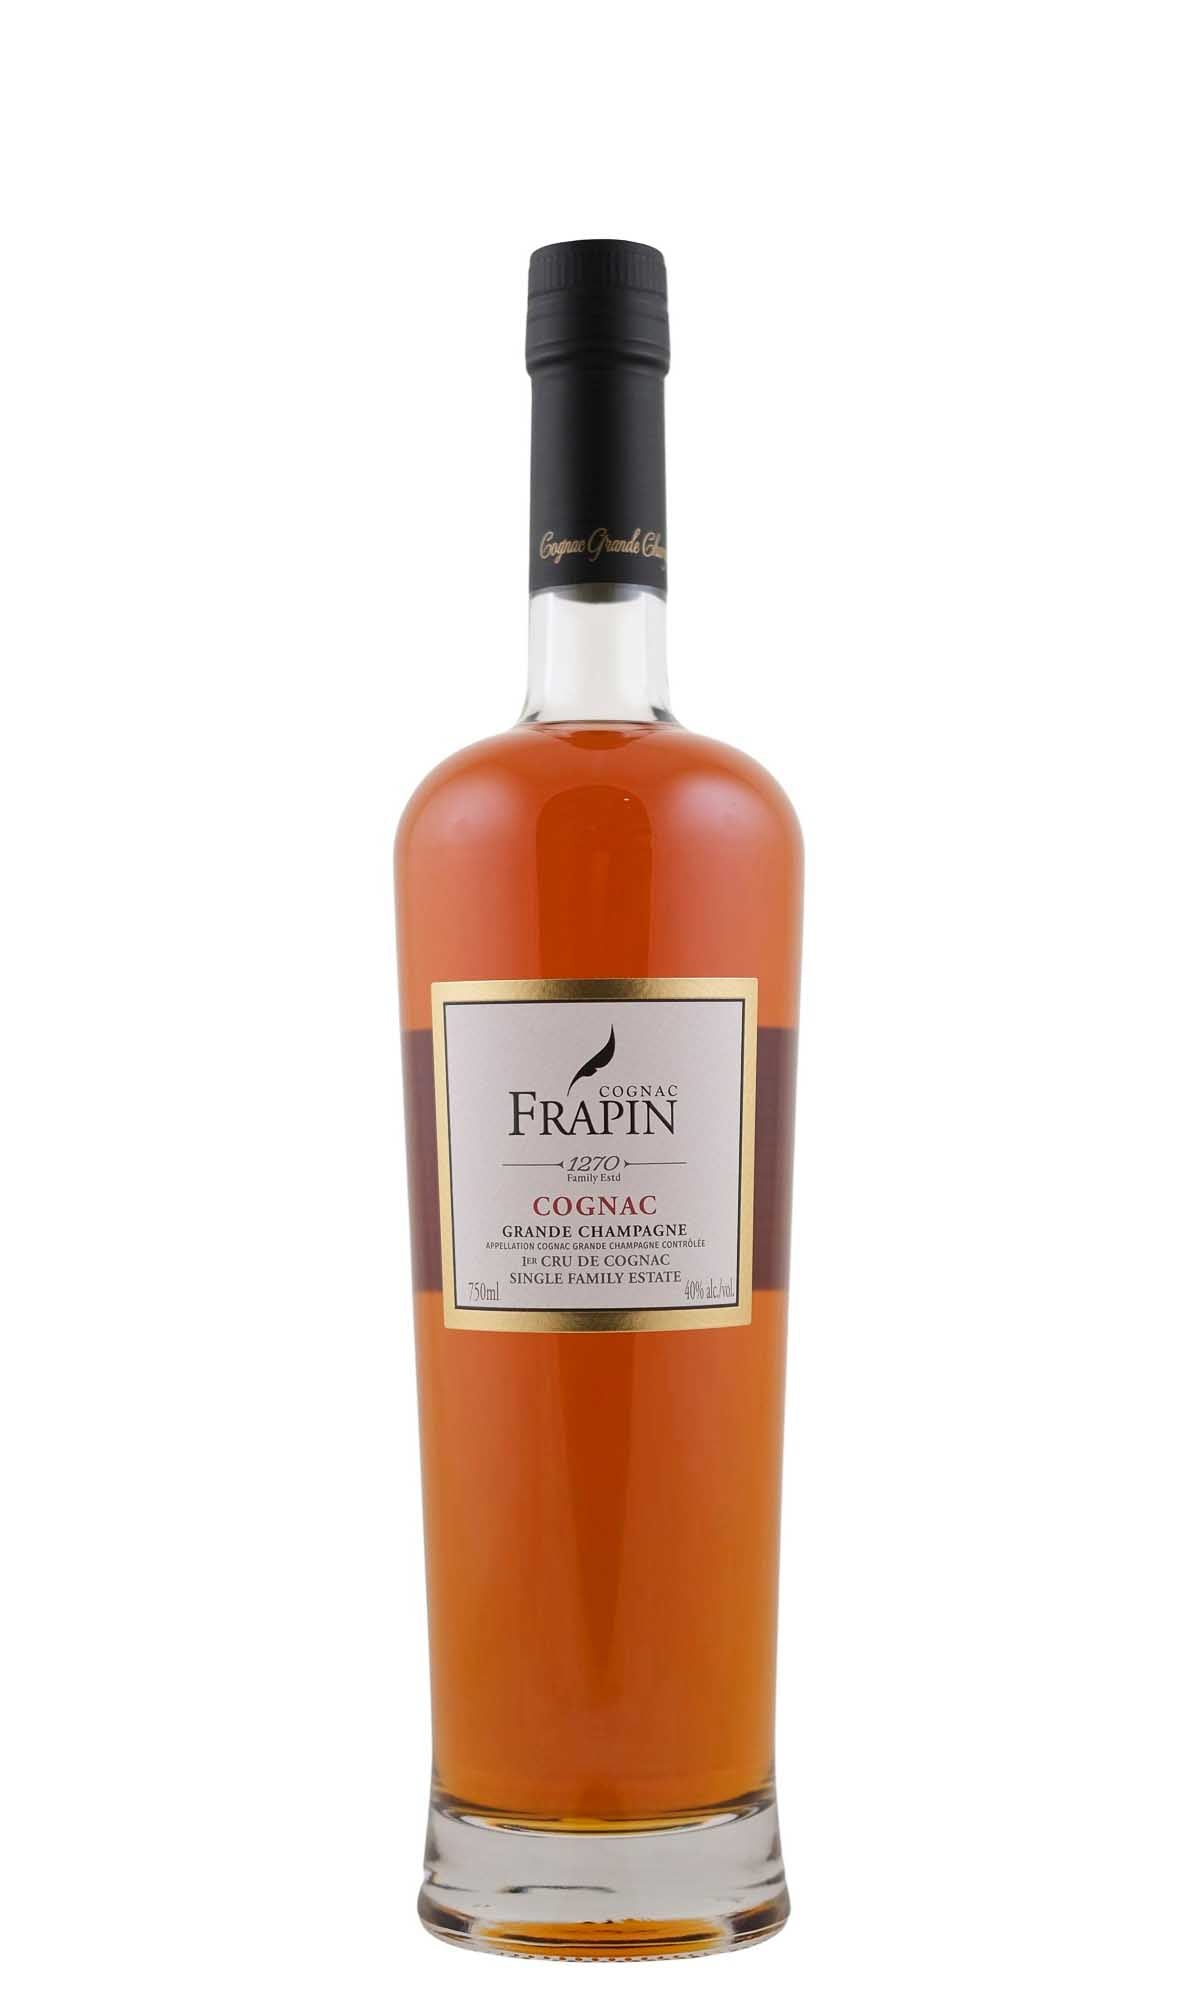 Frapin 1270 Cognac Grande Champagne, 1er Cru